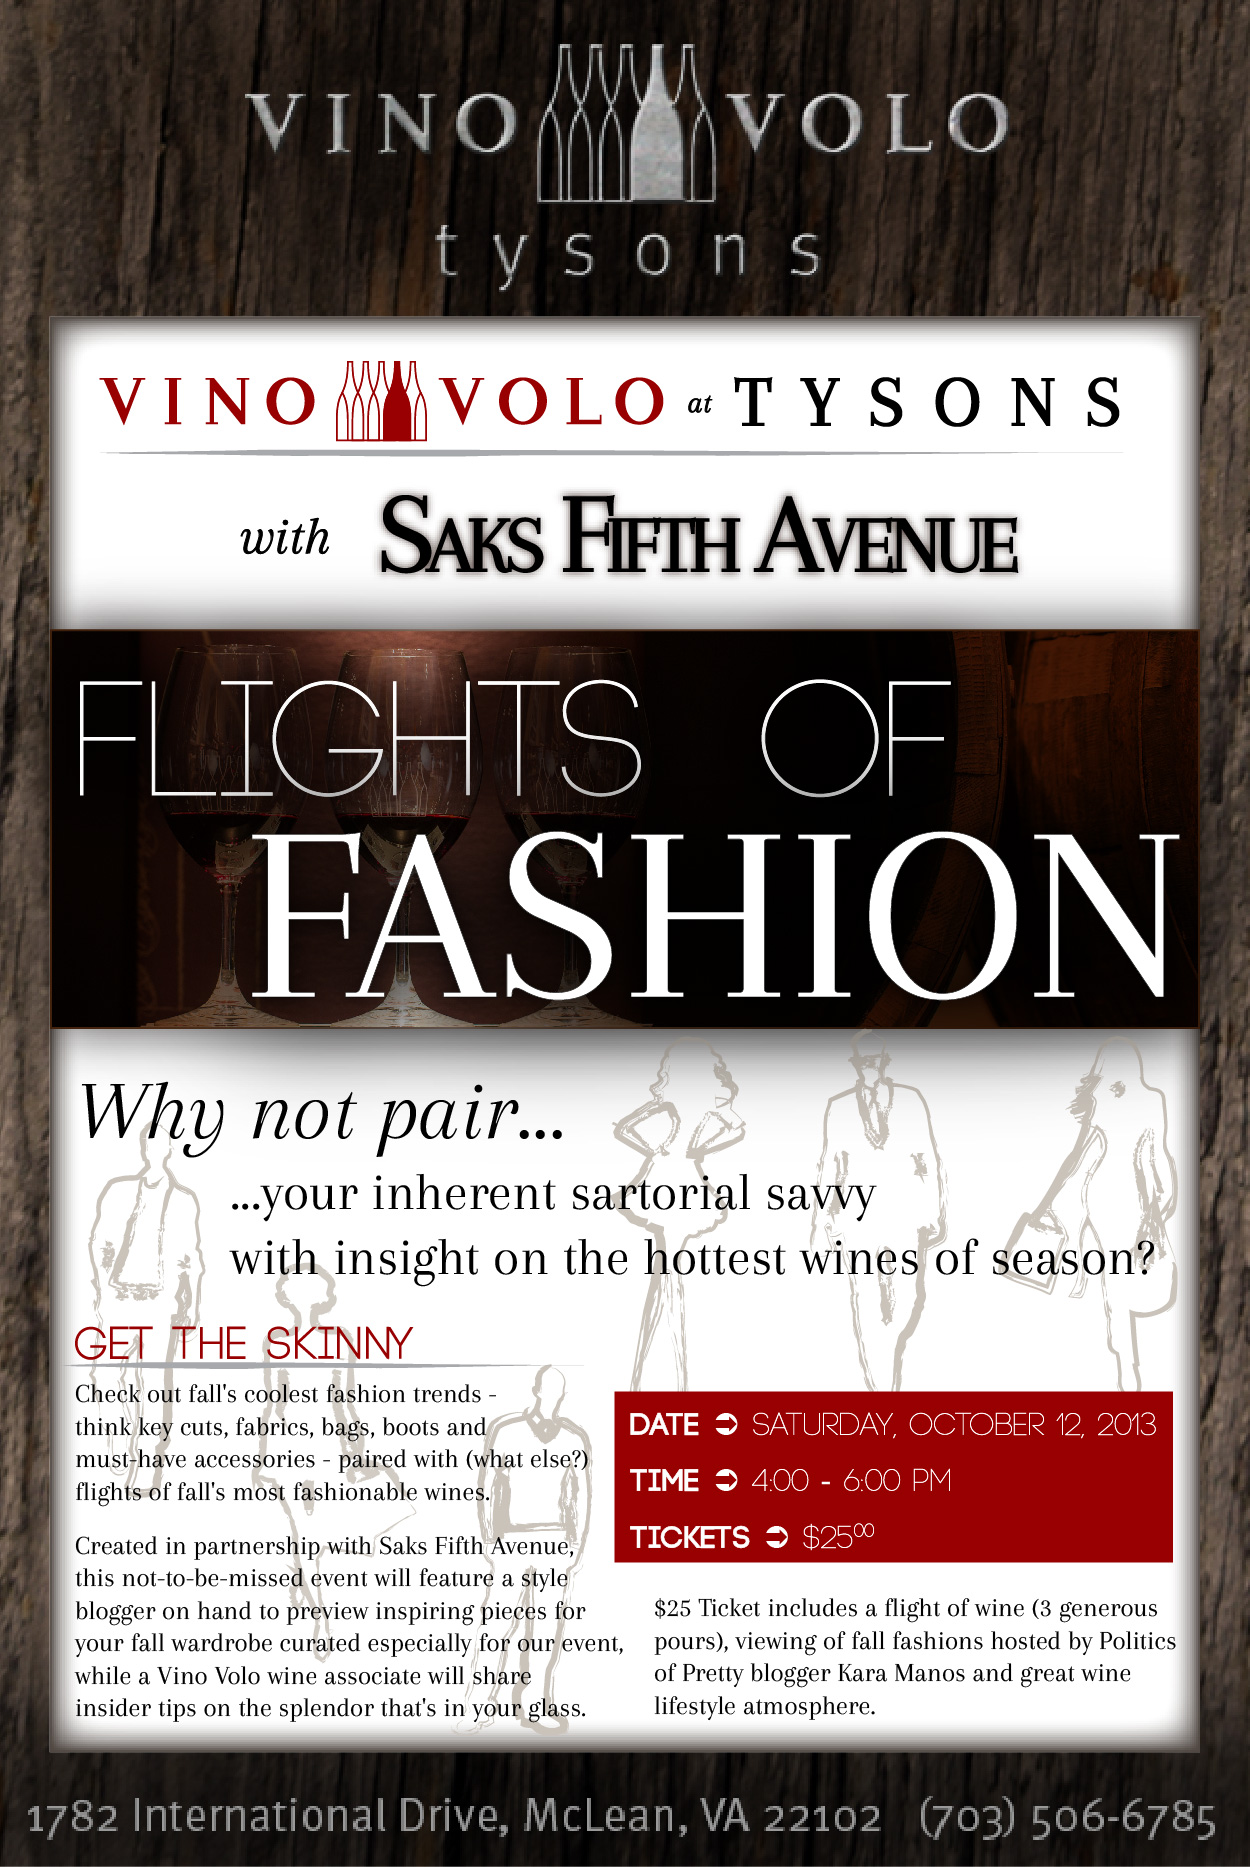 Vino Volo Tysons_Flights of Fashion Event Page